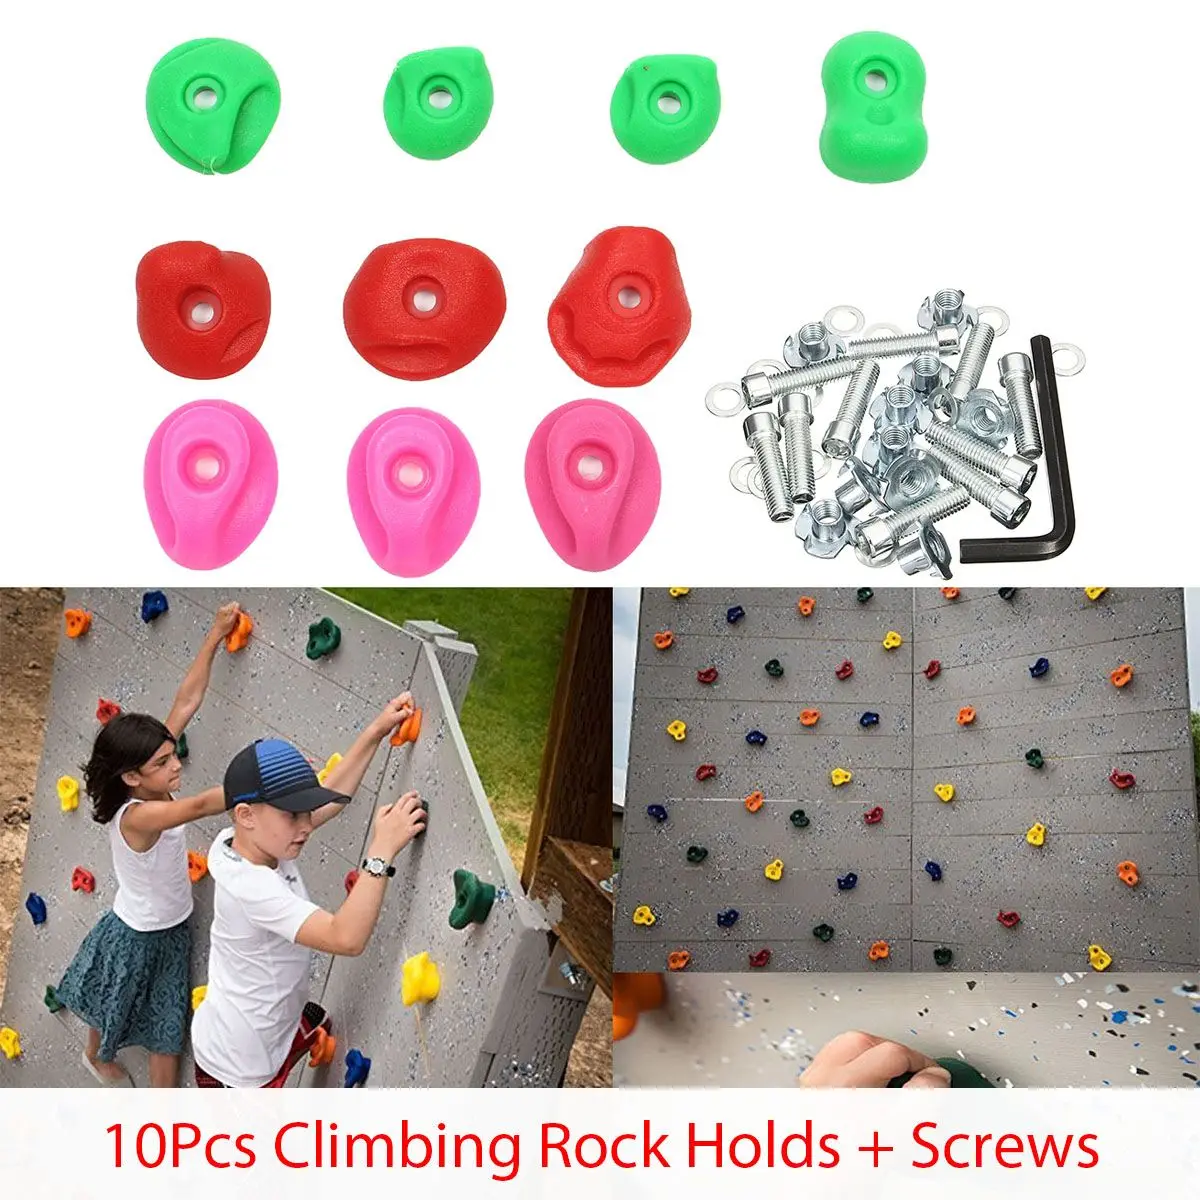 10PCS KIDS TEXTURED ROCK WALL CLIMBING HAND HOLDS SET INDOOR/OUTDOOR/PLAYGROUND